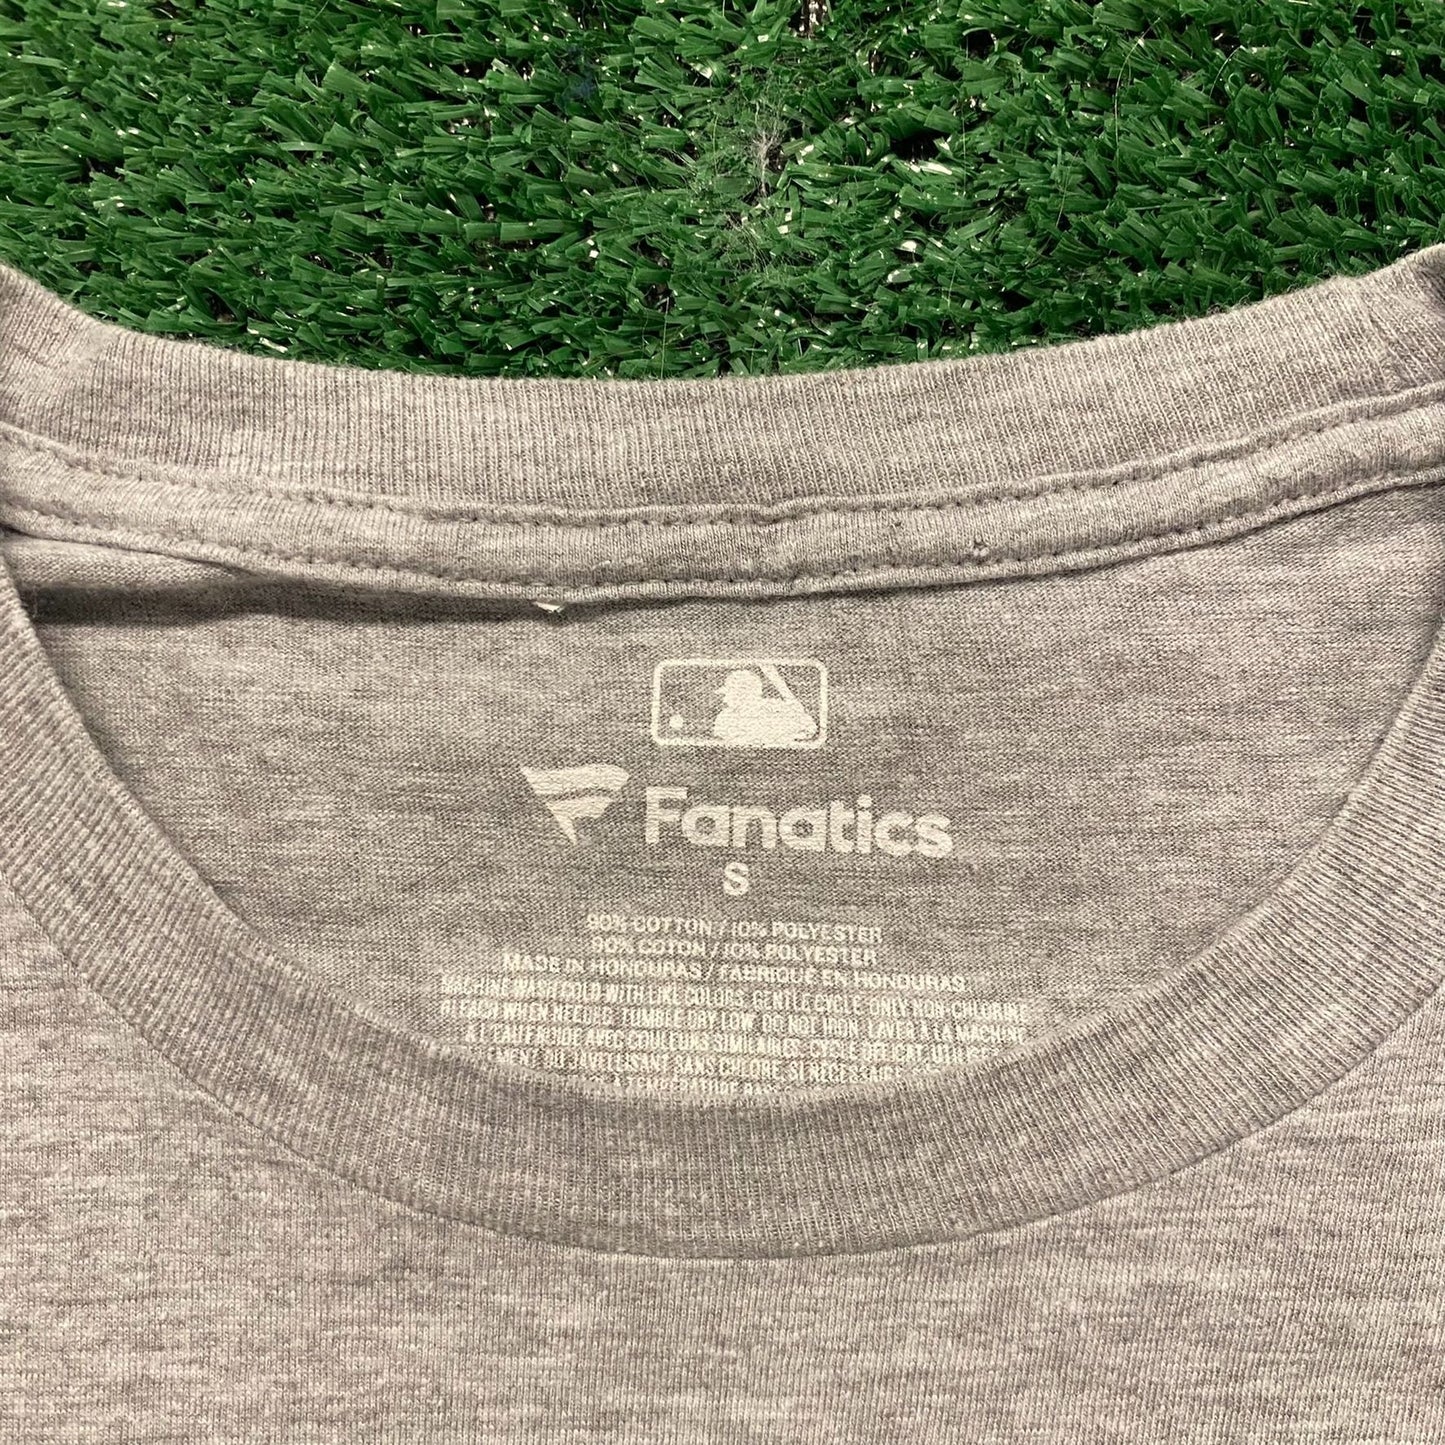 Seattle Mariners Vintage MLB Baseball T-Shirt